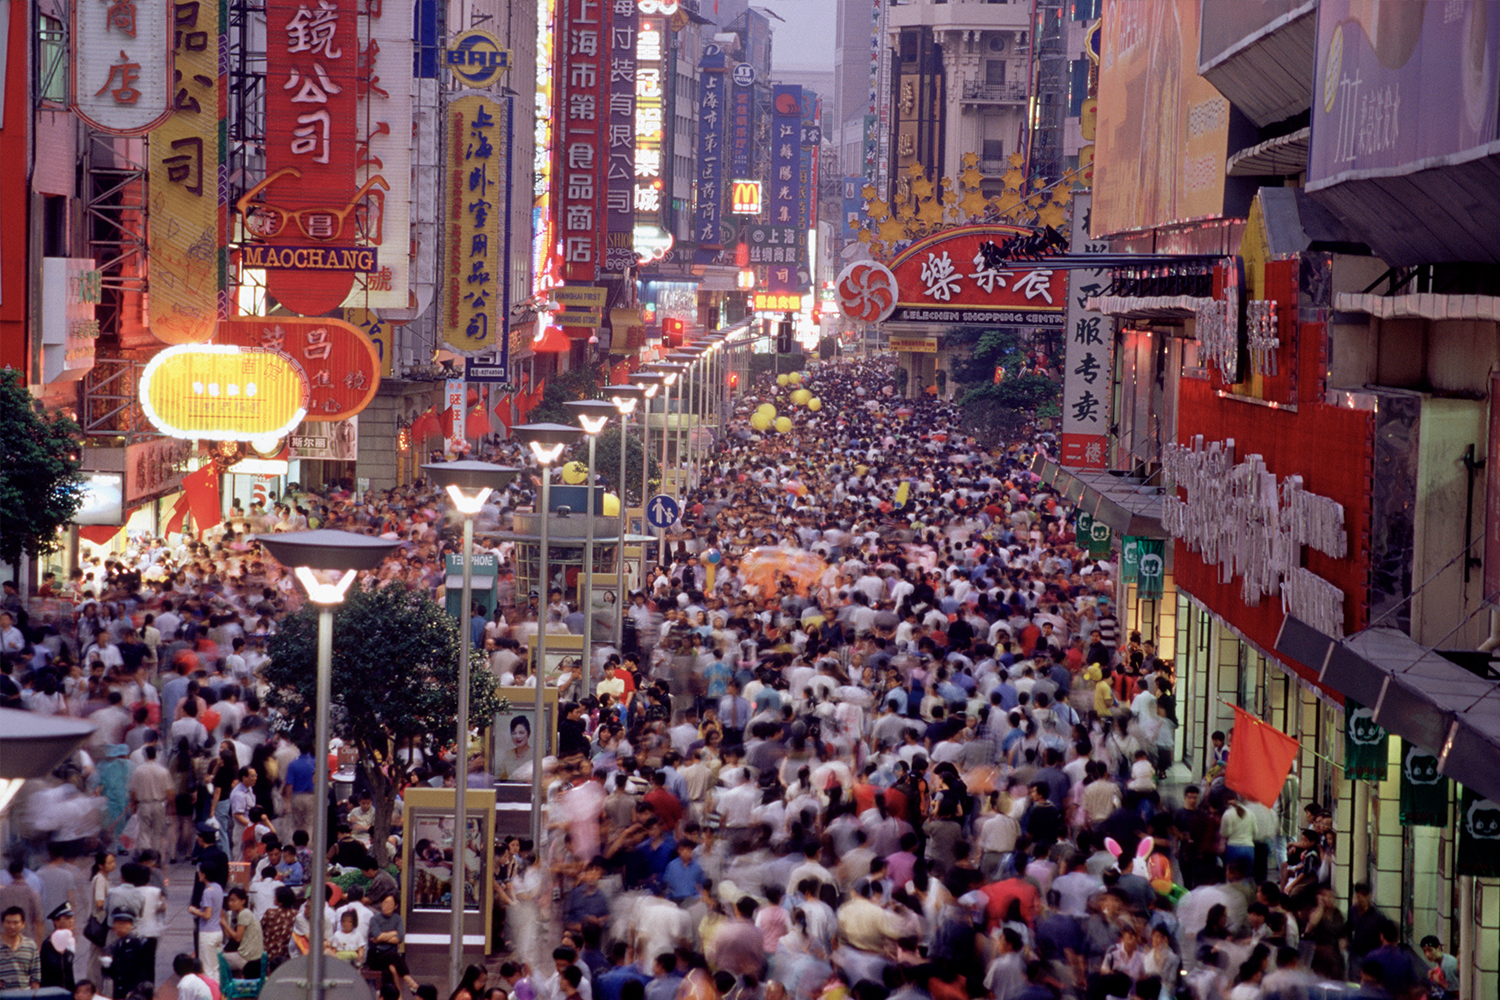 Crowded Shanghai streets